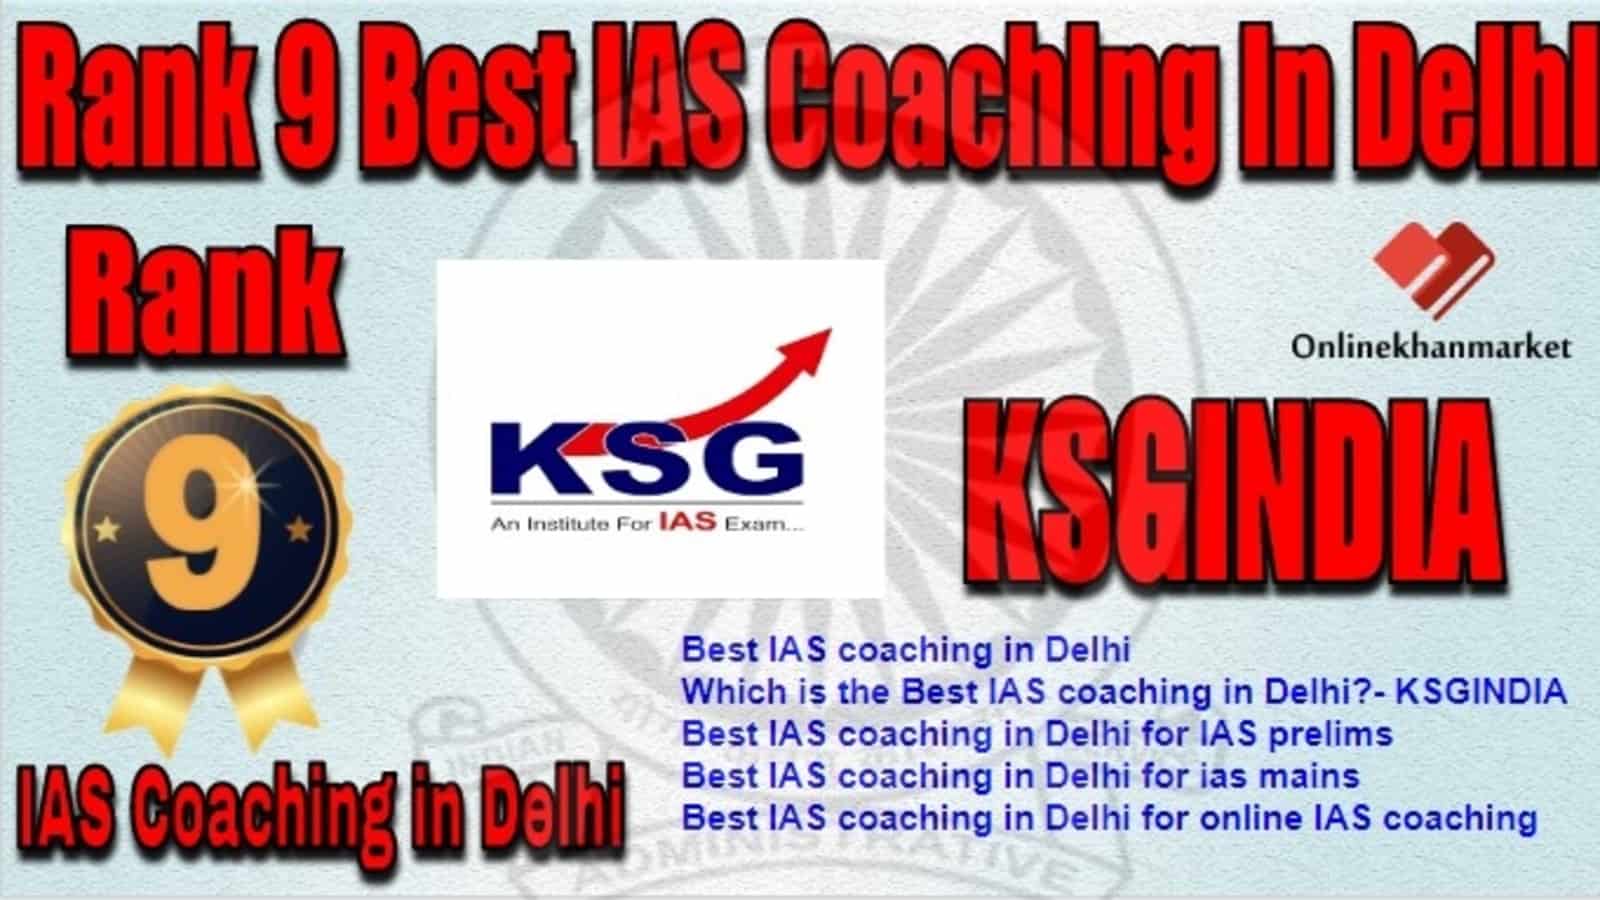 Rank 9 Best IAS Coaching in Delhi KSG India